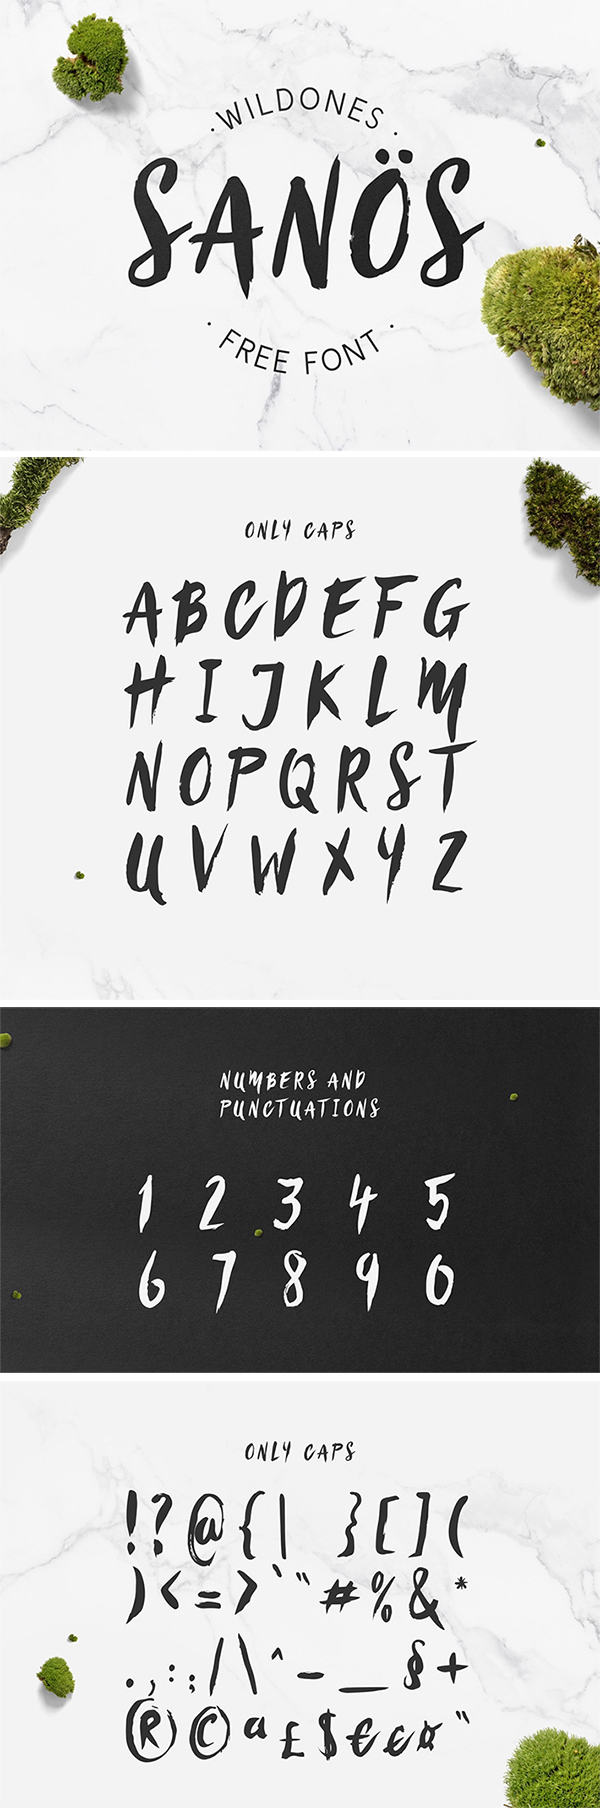 Awesome Sanös Brush or Script Font Free Download